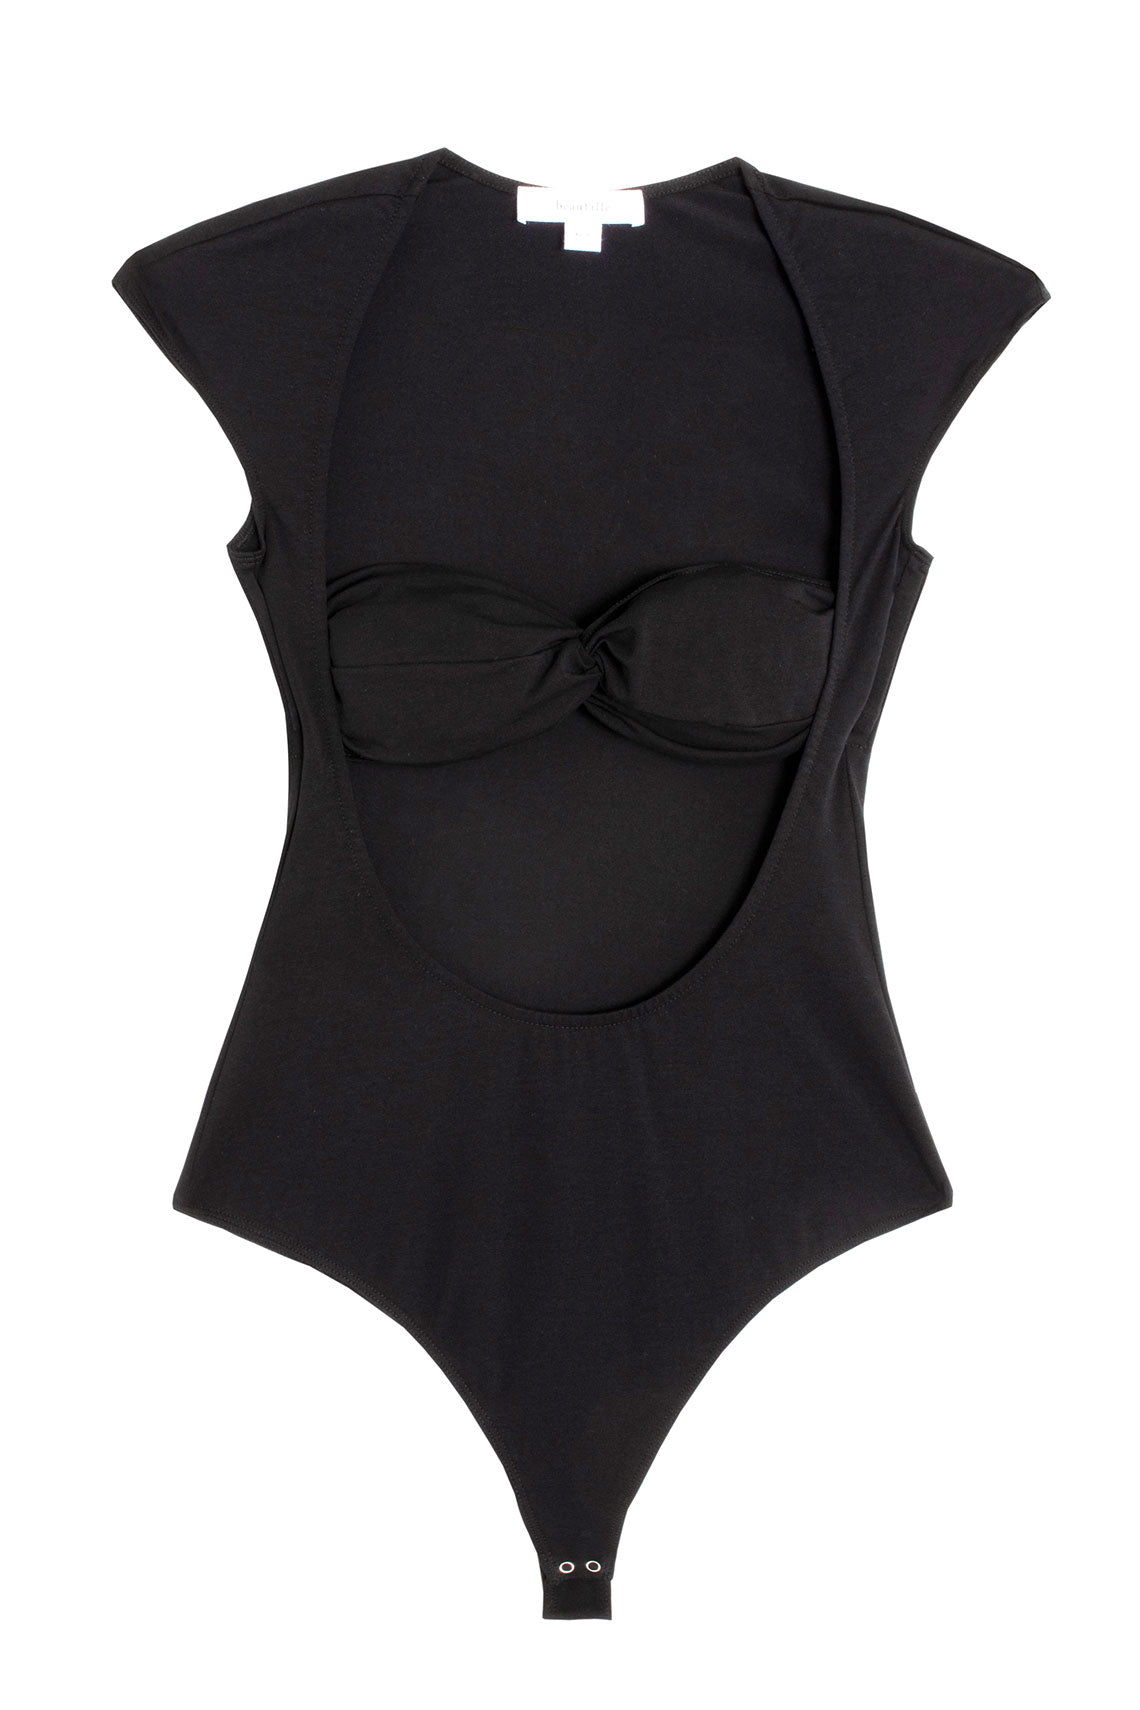 SALE 30% OFF - Beaufille - Black Baes Bodysuit – BONA DRAG